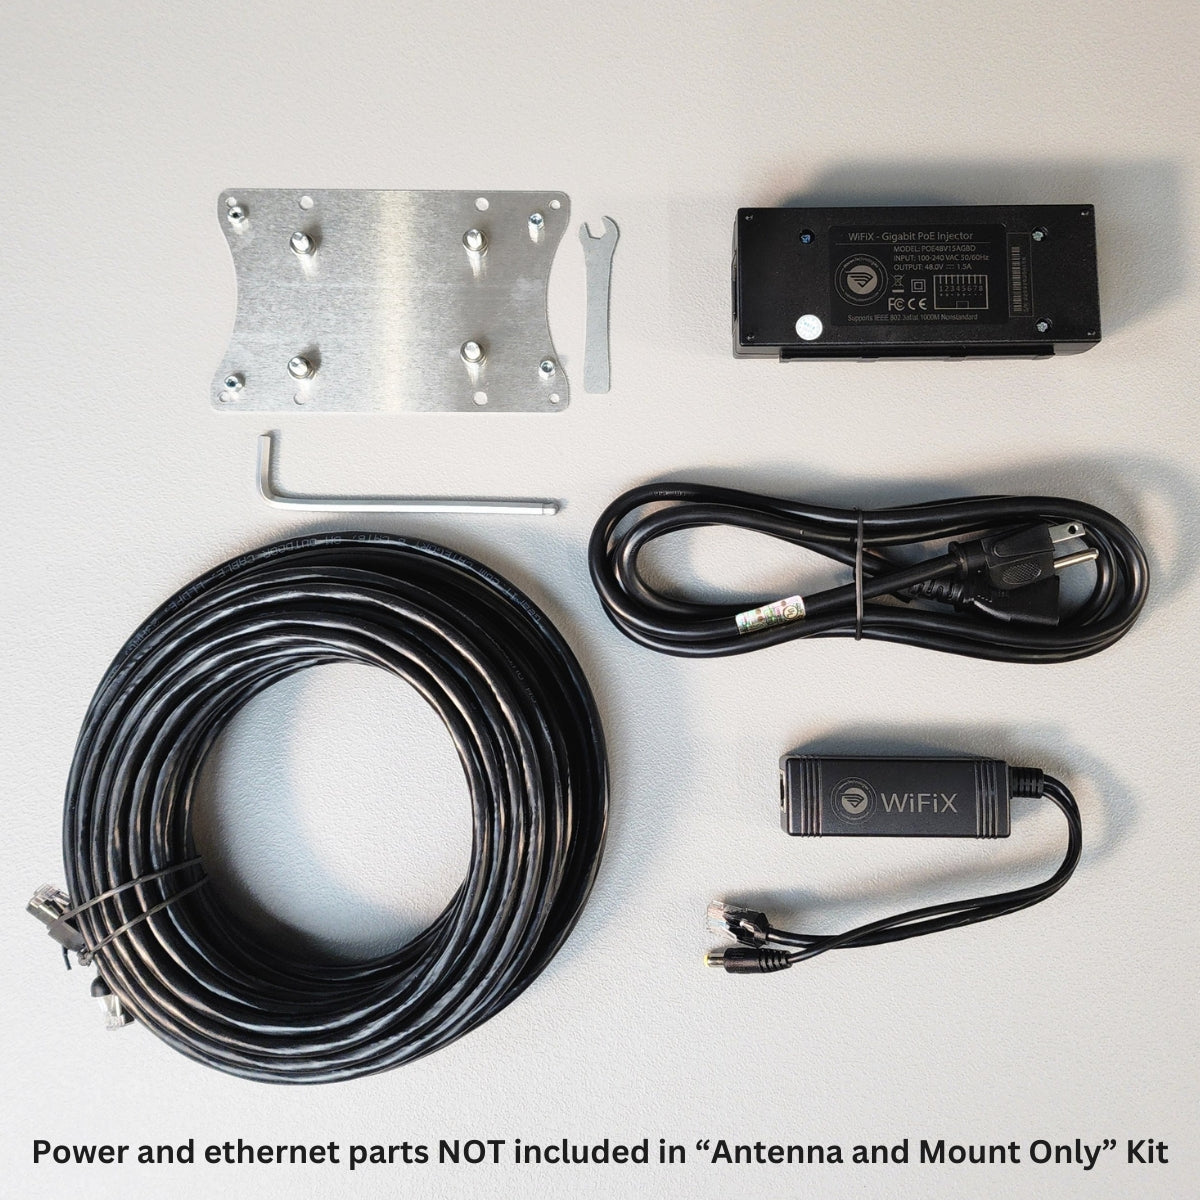 InvisaGig QuadLink Antenna – Outdoor PoE Antenna and Enclosure – Full System